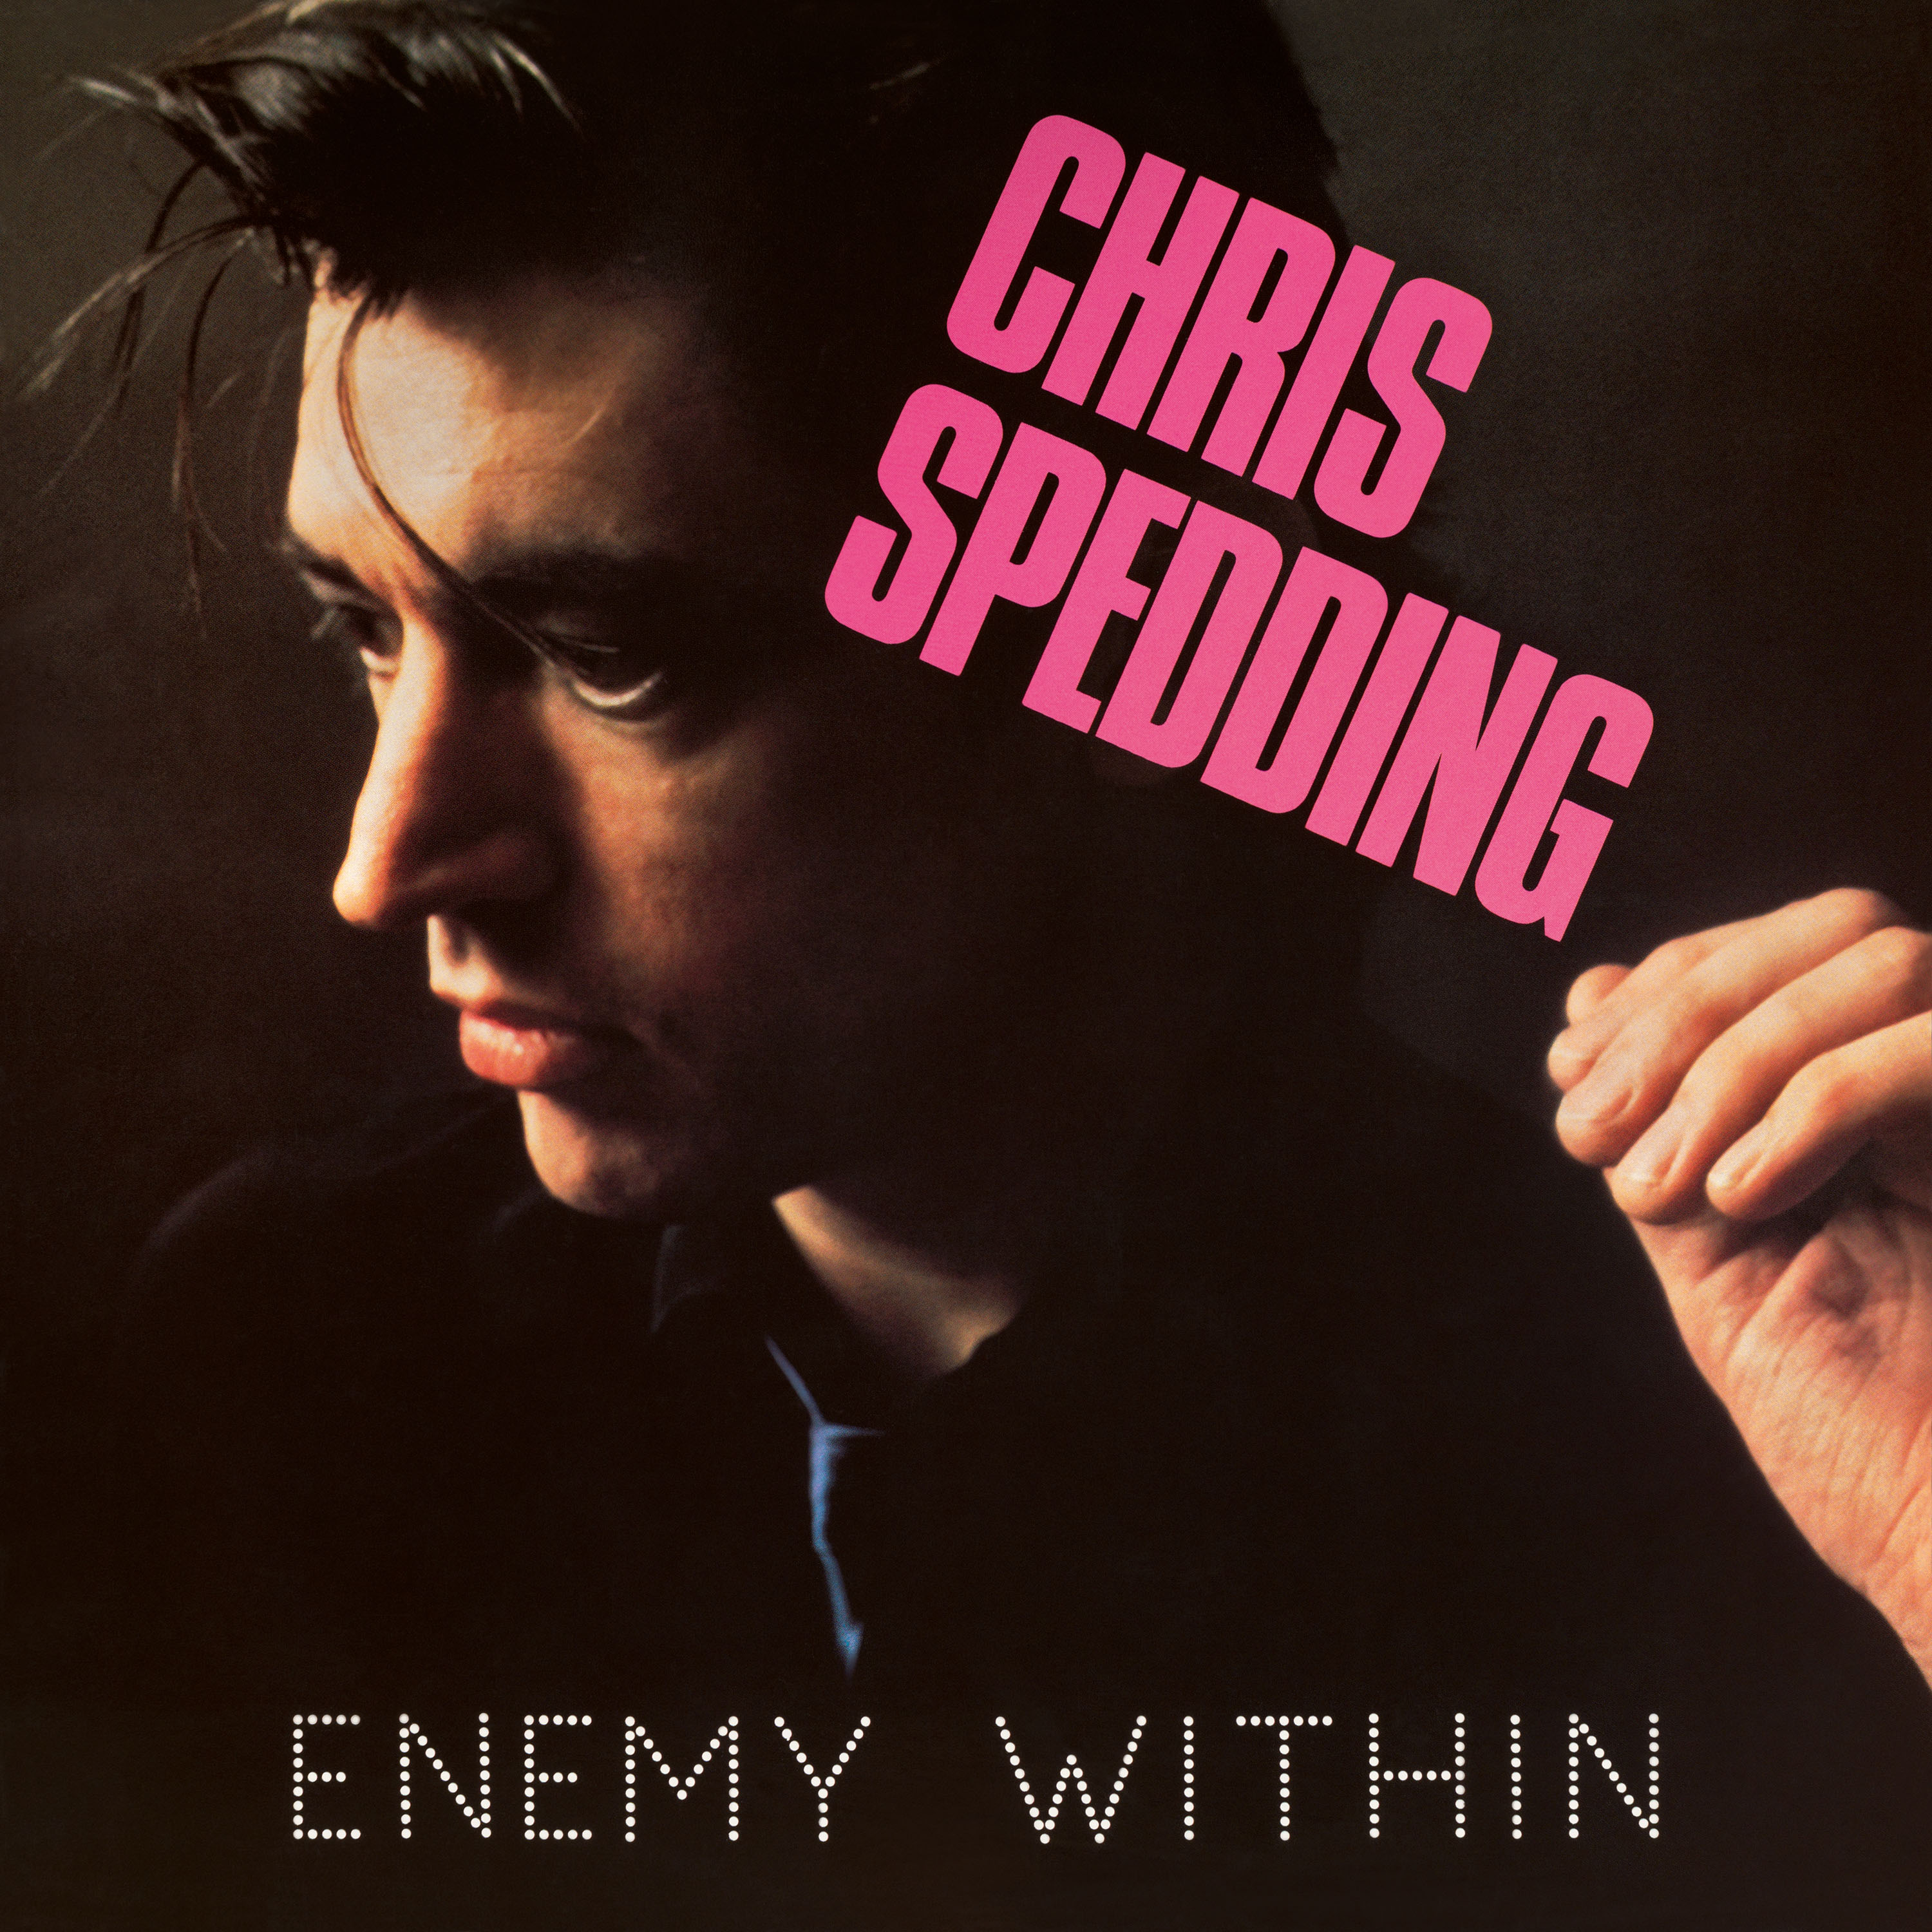 Chris Spedding – Enemy Within